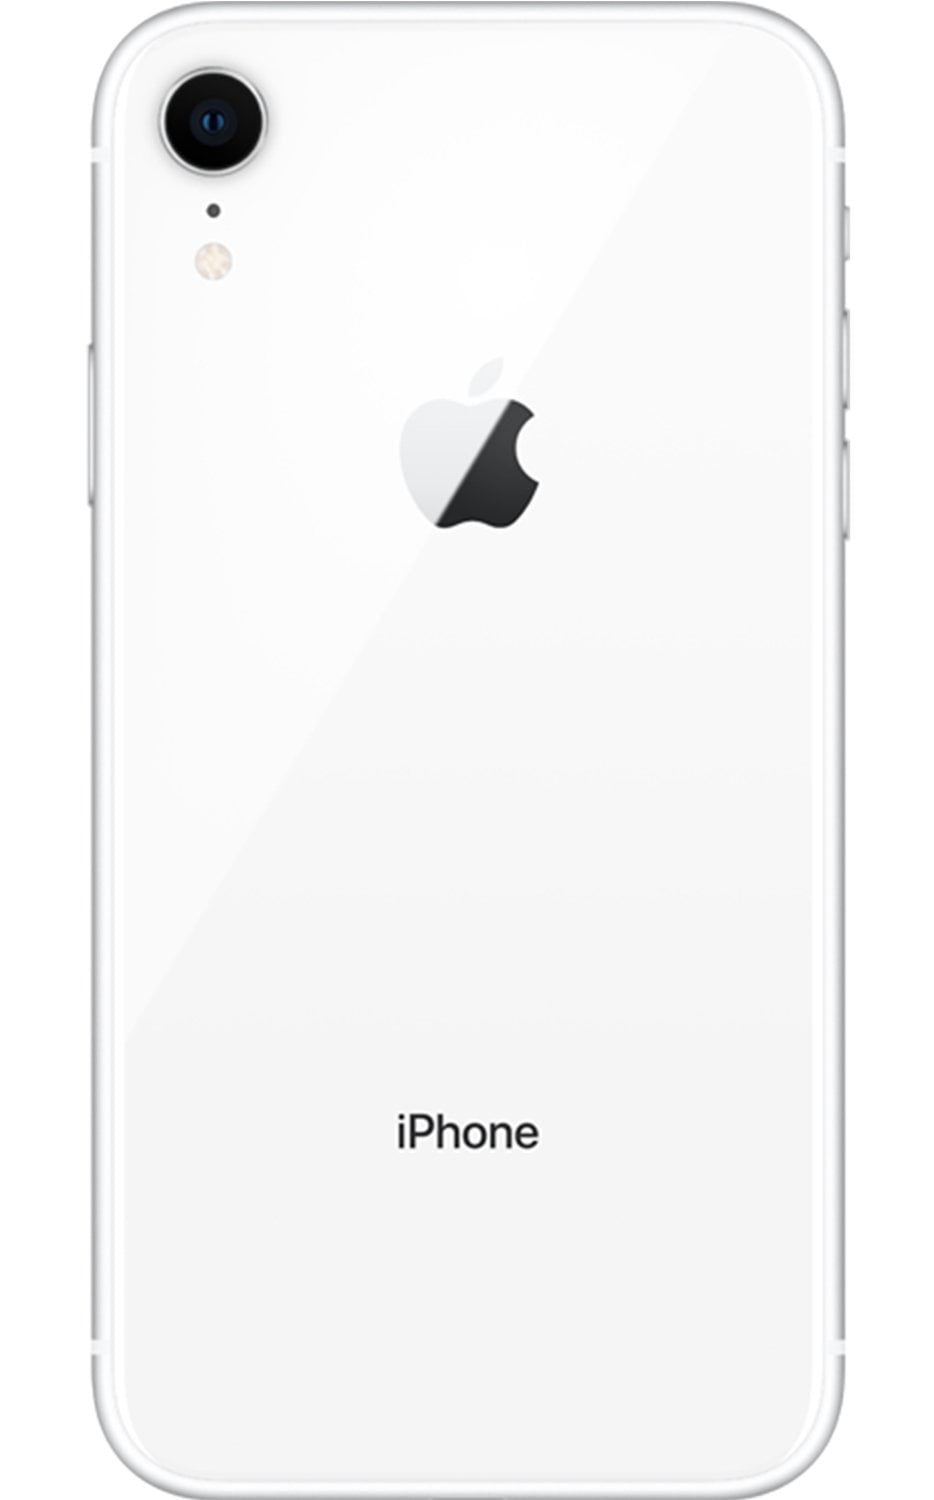 Apple iPhone XR 256GB Fully Unlocked (Verizon + Sprint + GSM